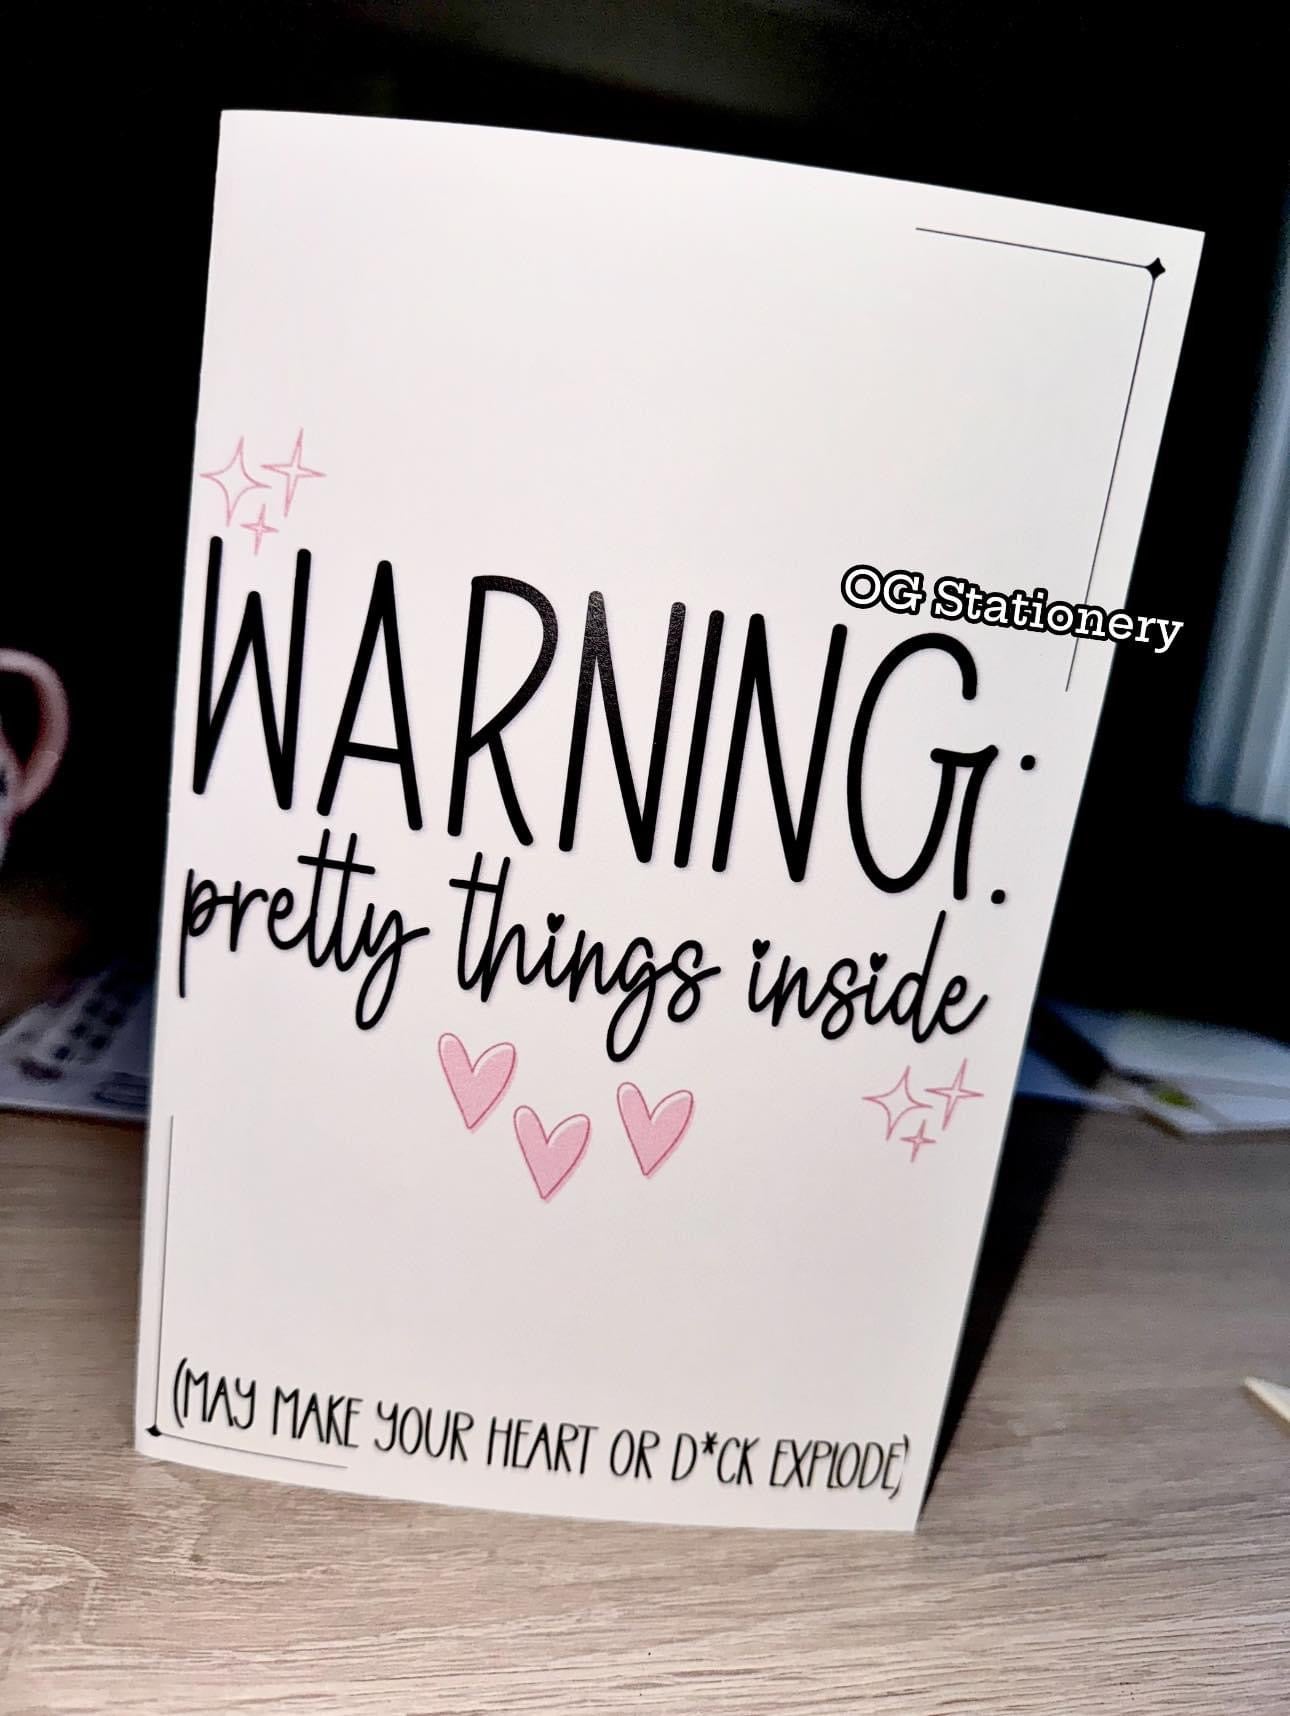 Warning…pretty things inside